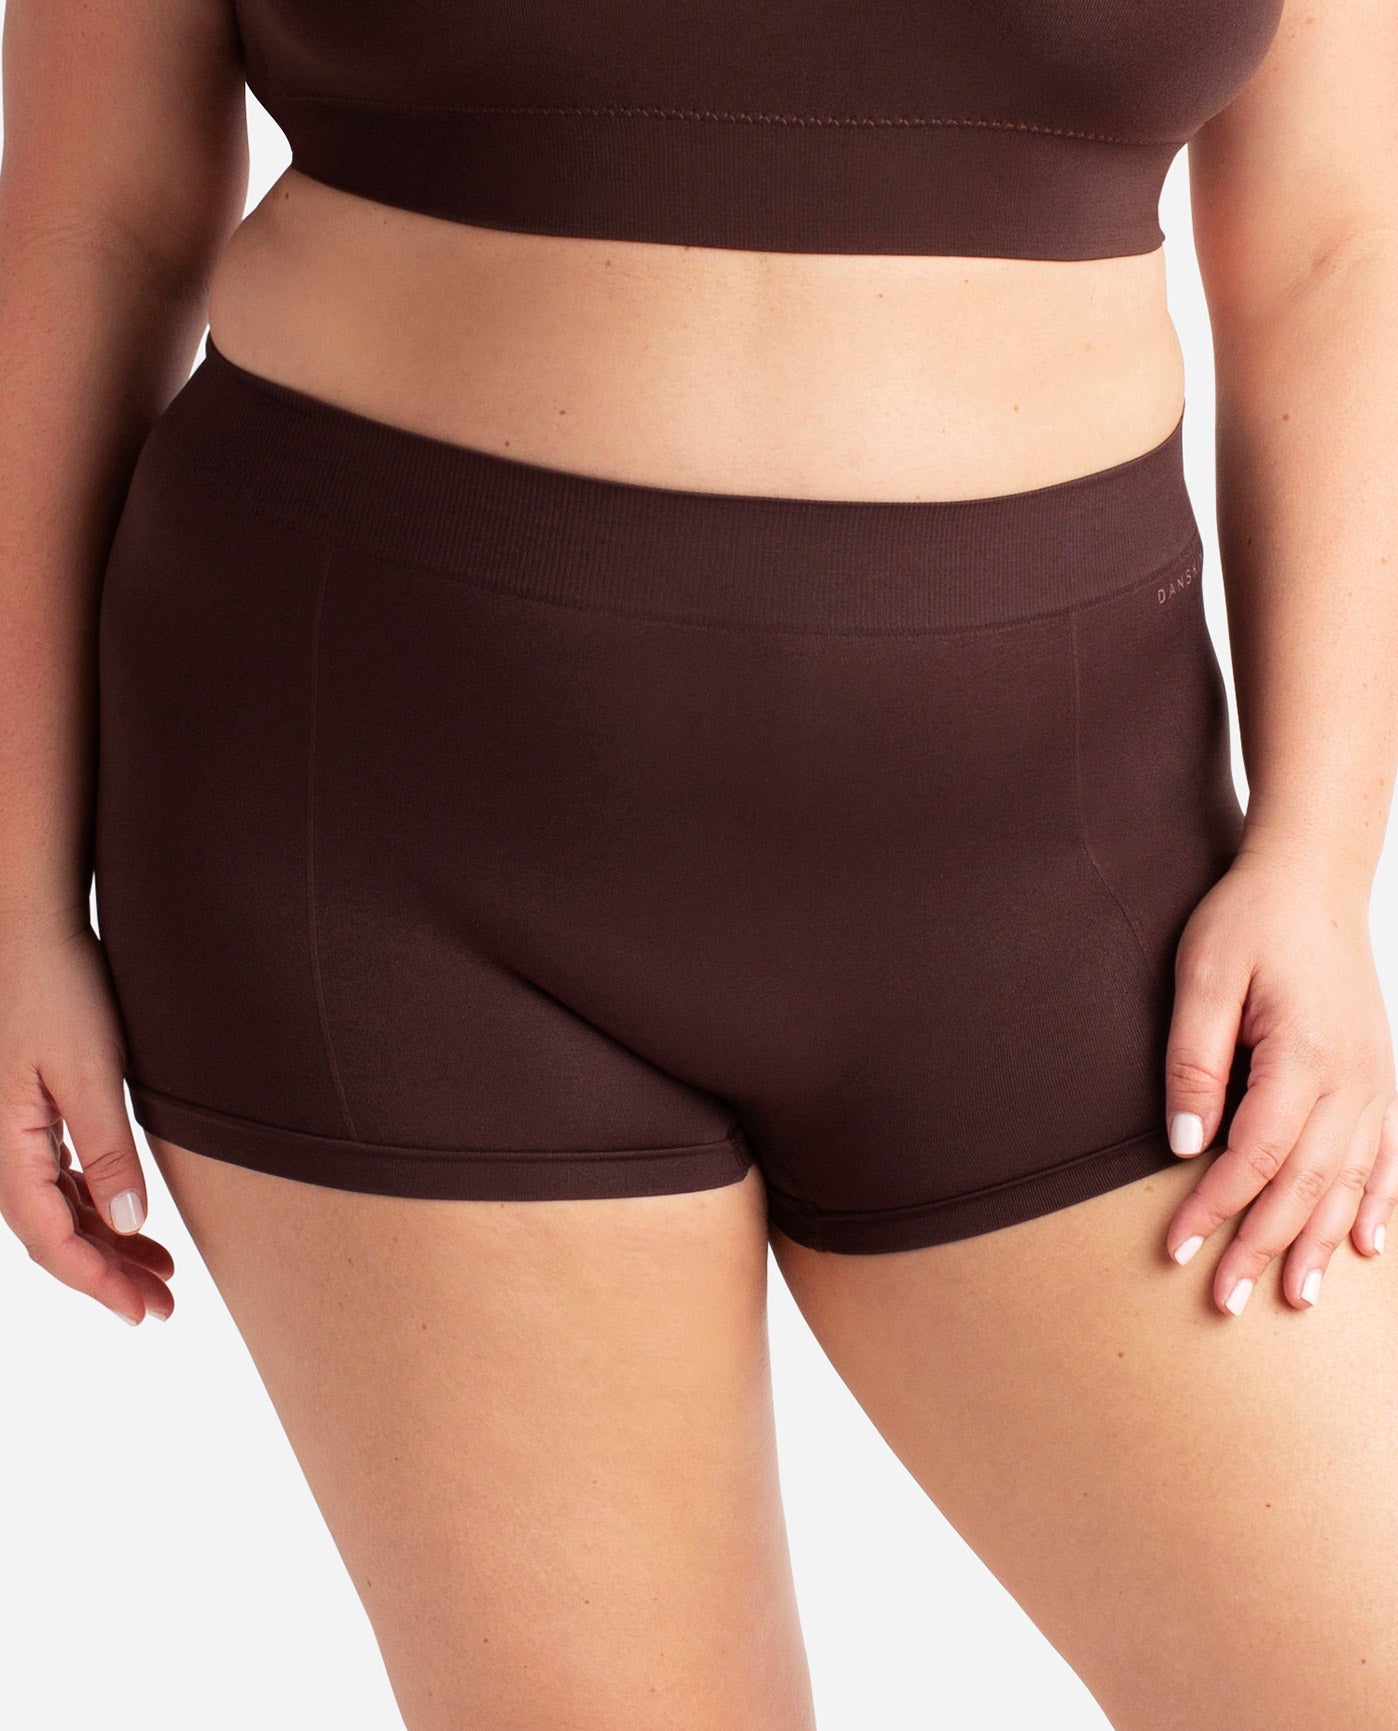 Normal Life] women's boyshort panties seamless underwear